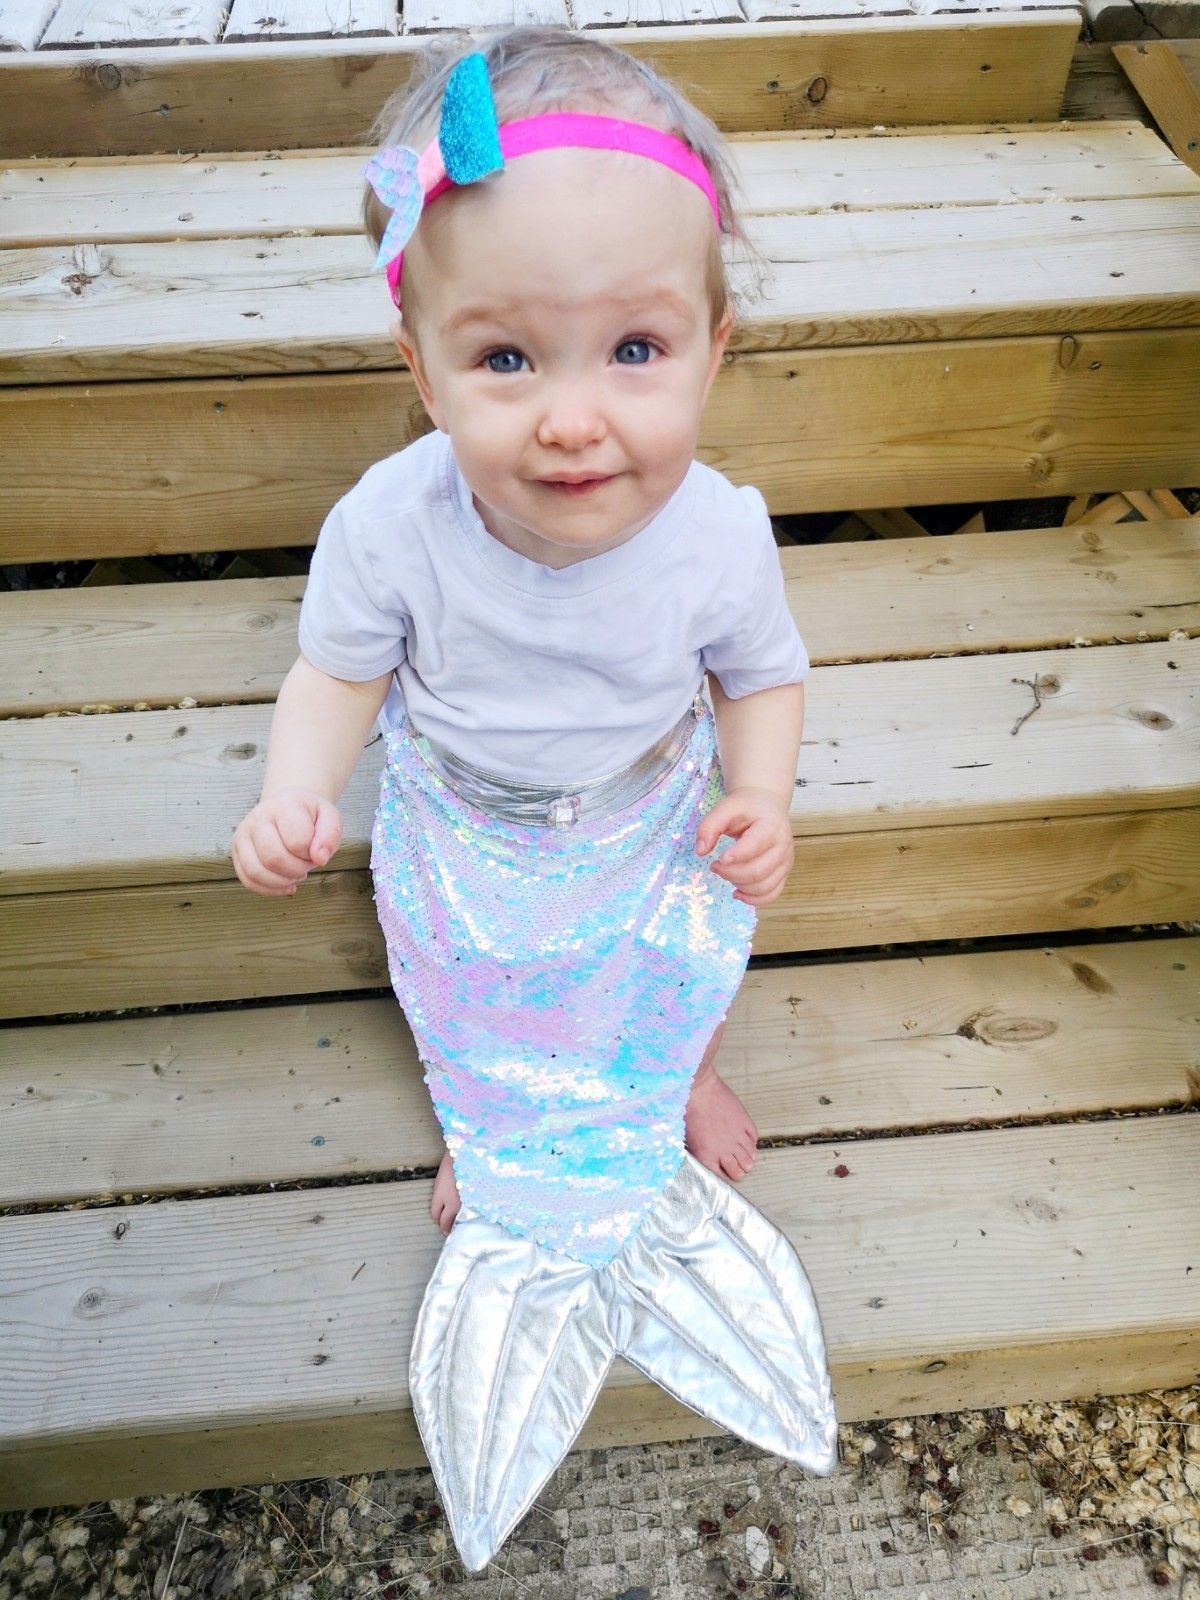 mermaid tail costume for kids